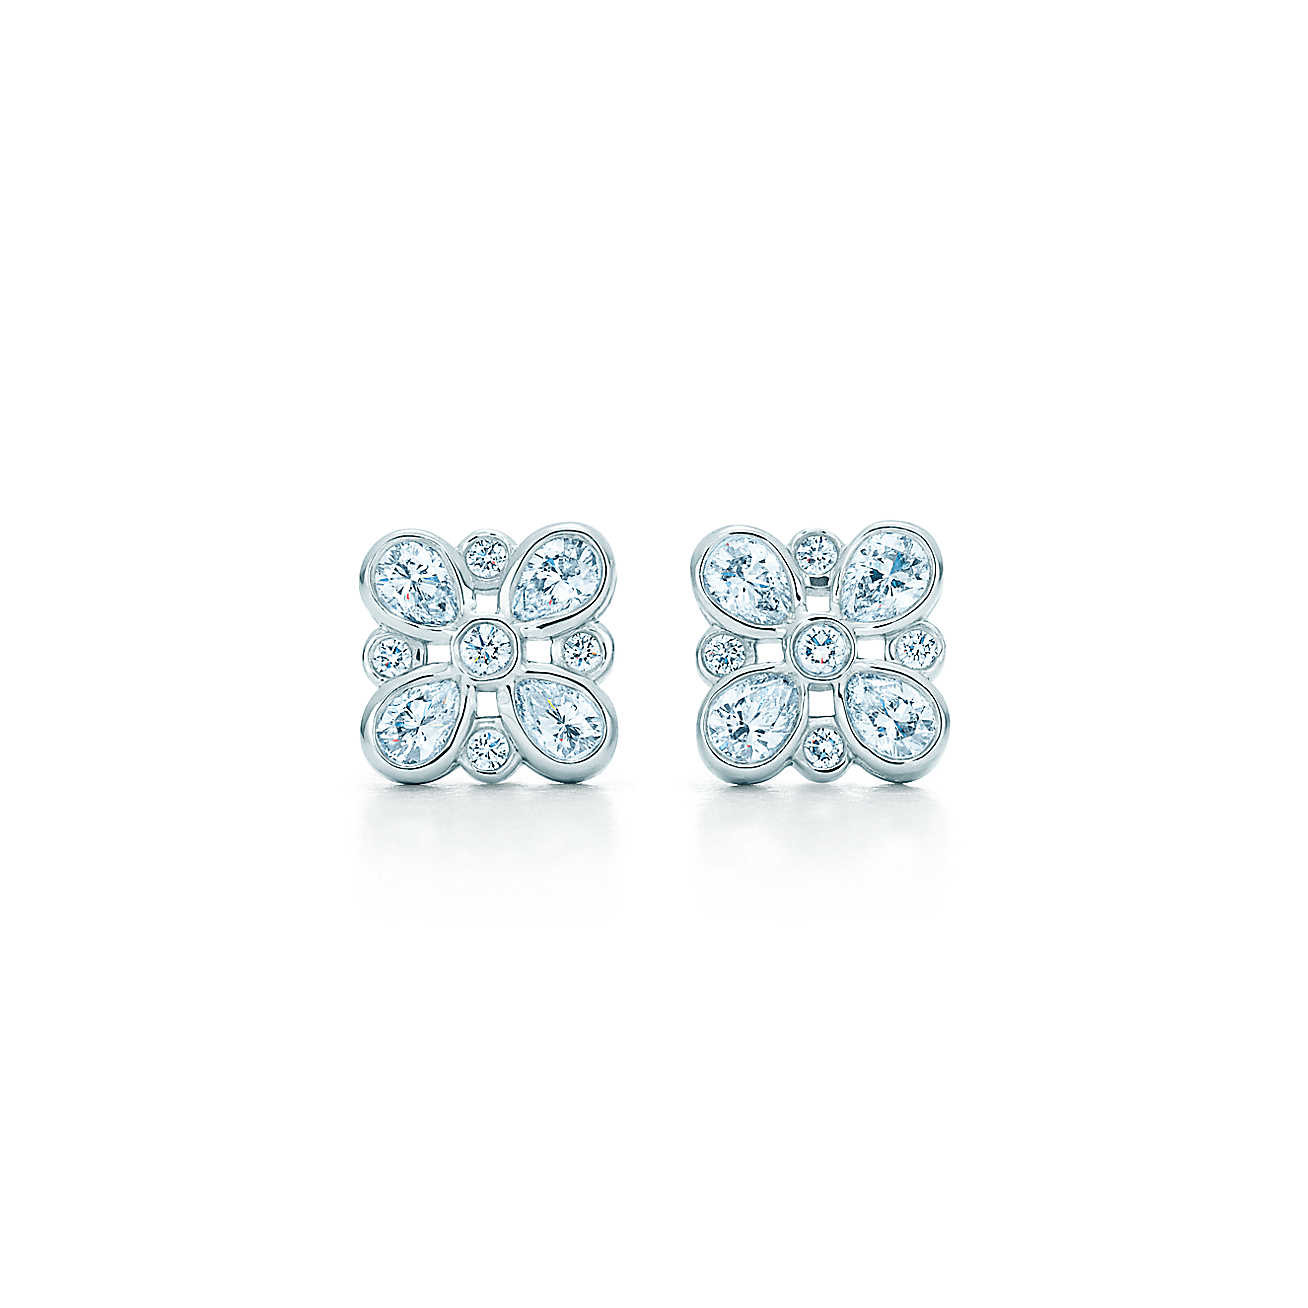 Tiffany Diamond Earrings
 Tiffany Enchant diamond earrings in platinum